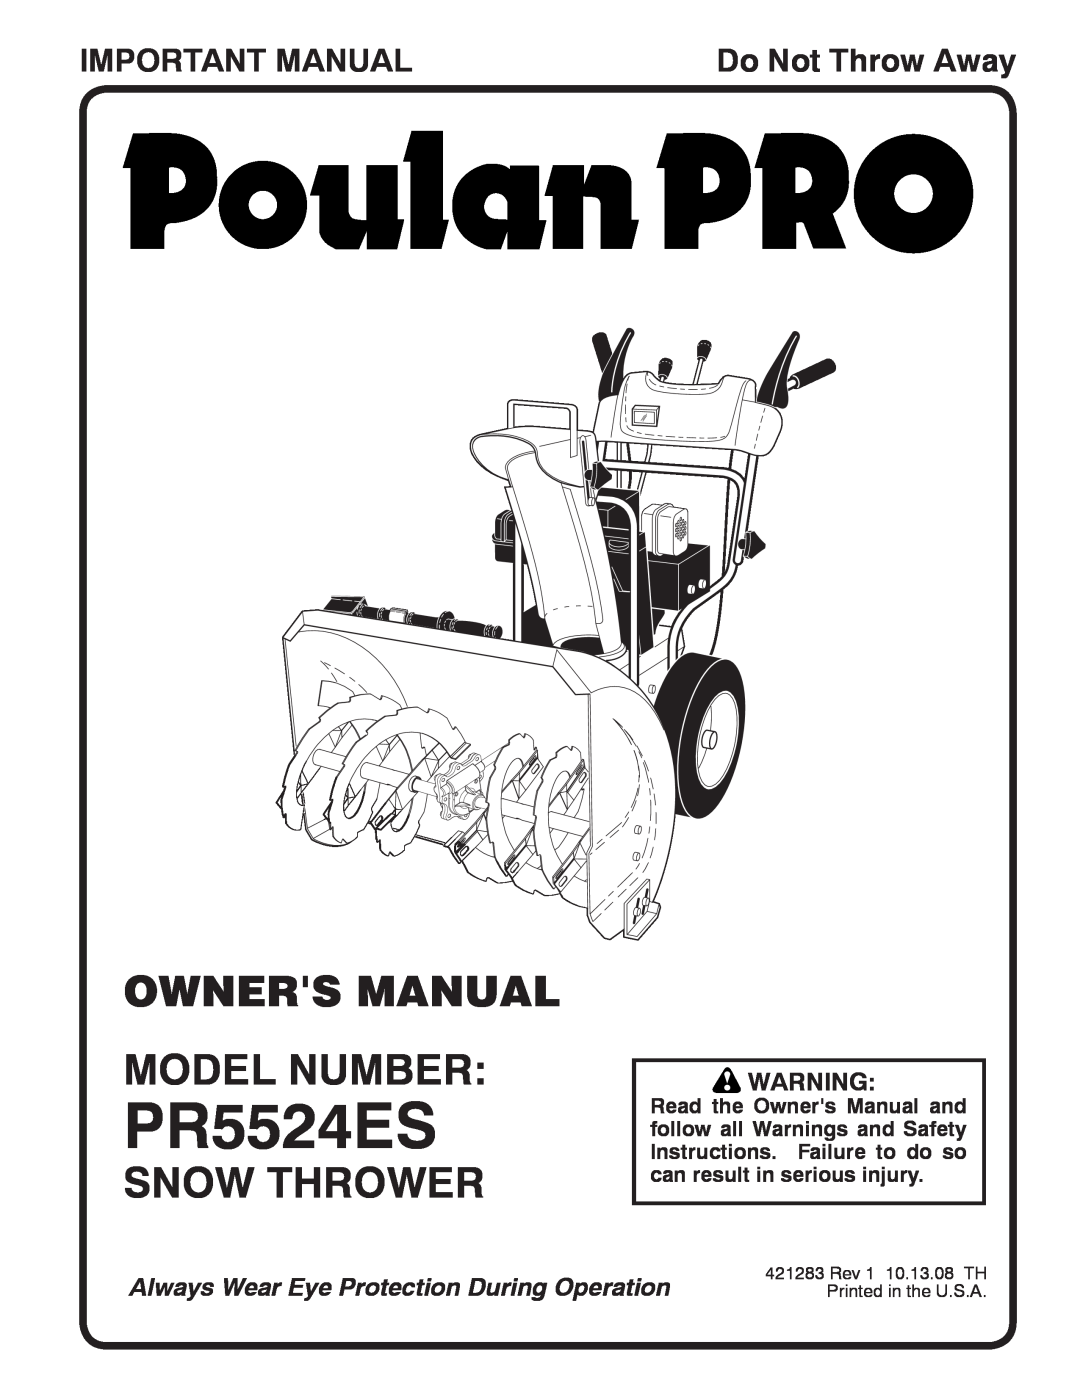 Poulan 421283 owner manual Snow Thrower, Important Manual, PR5524ES, Do Not Throw Away 